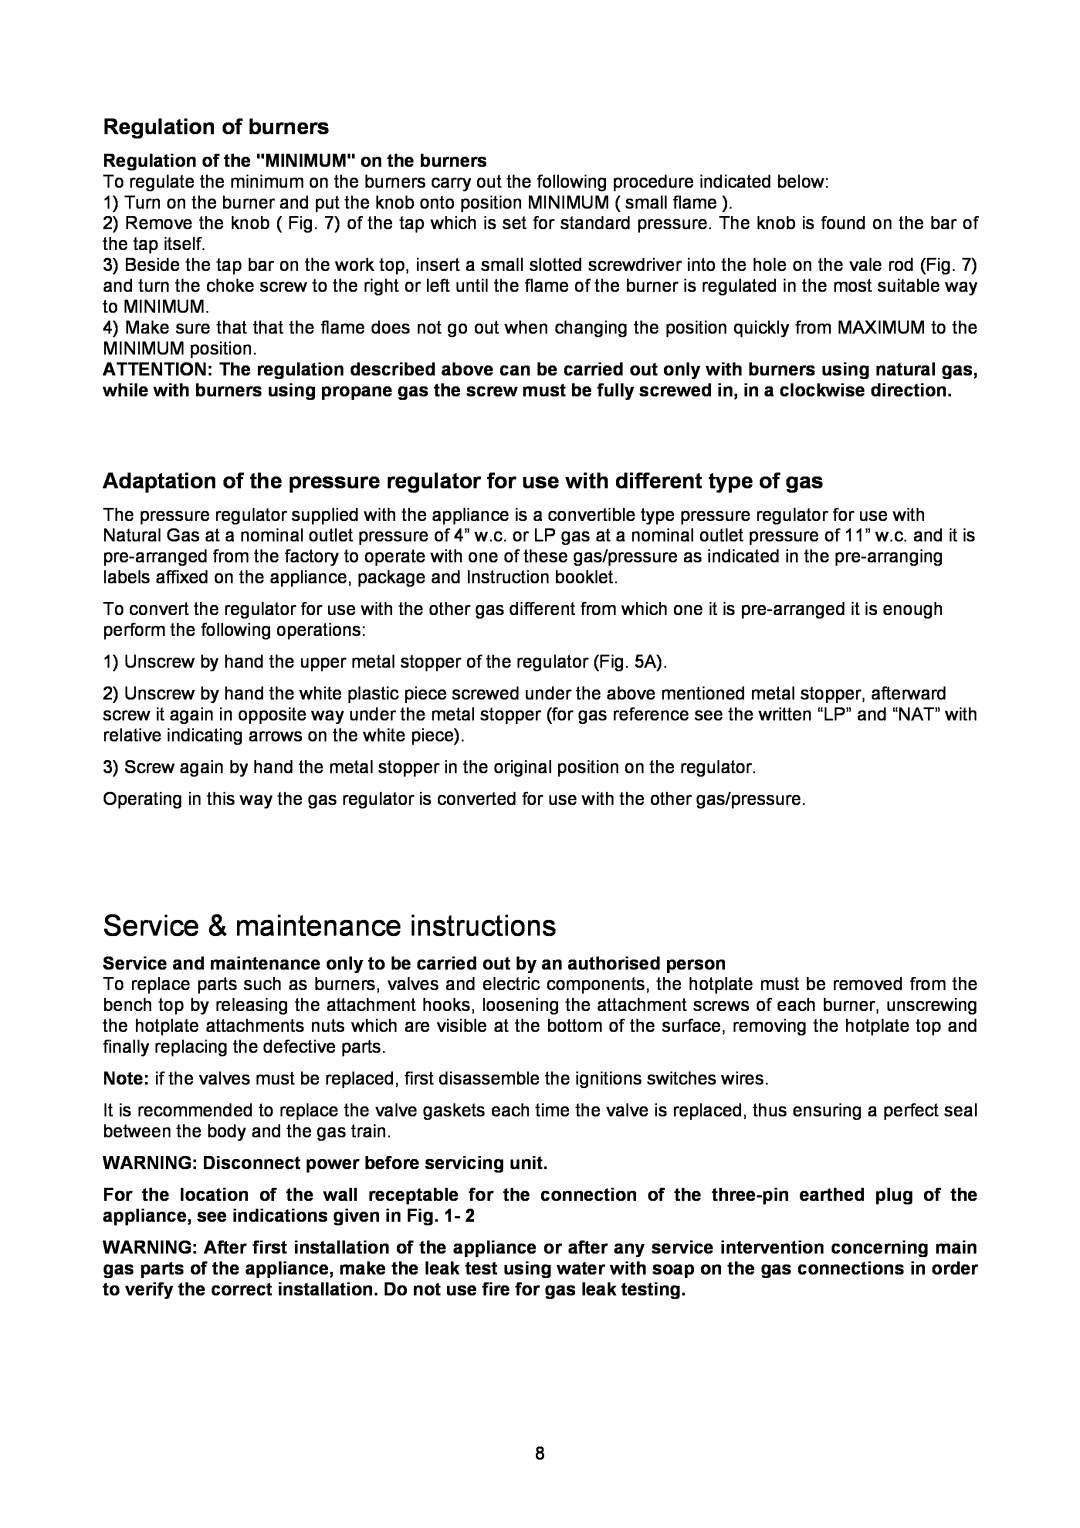 Bertazzoni P34 5 00 X dimensions Service & maintenance instructions, Regulation of burners 